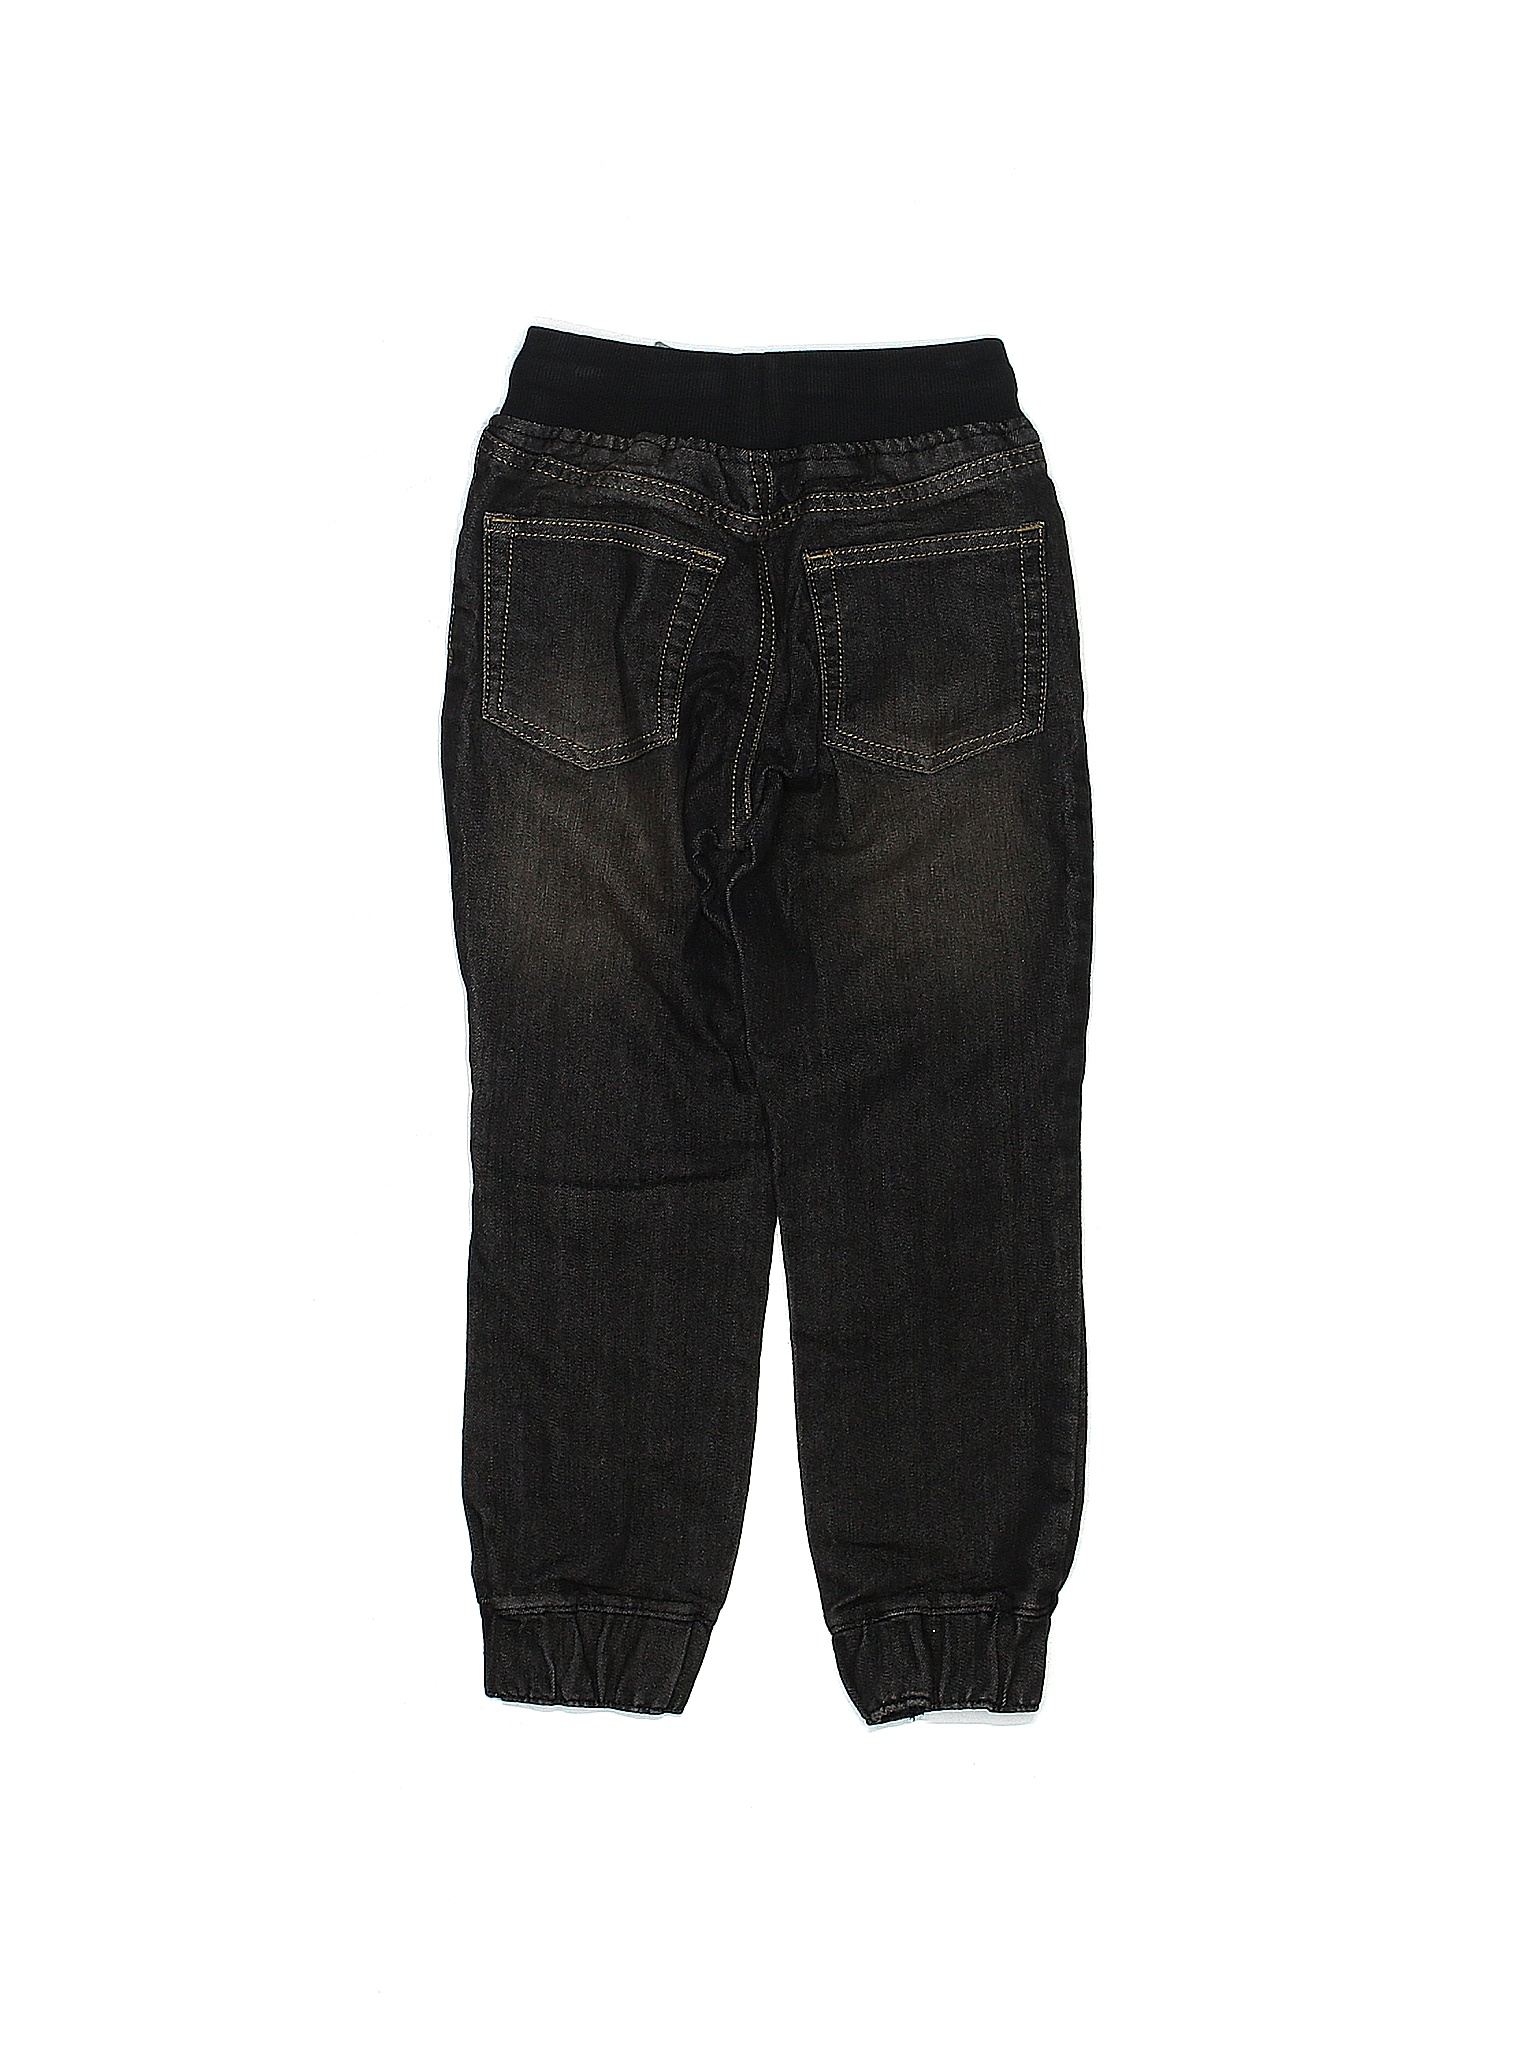 NWT Gymboree WOODSIDE WALK Boys Size 18-24 Months Jeans Bodysuit Socks 3-PC SET 